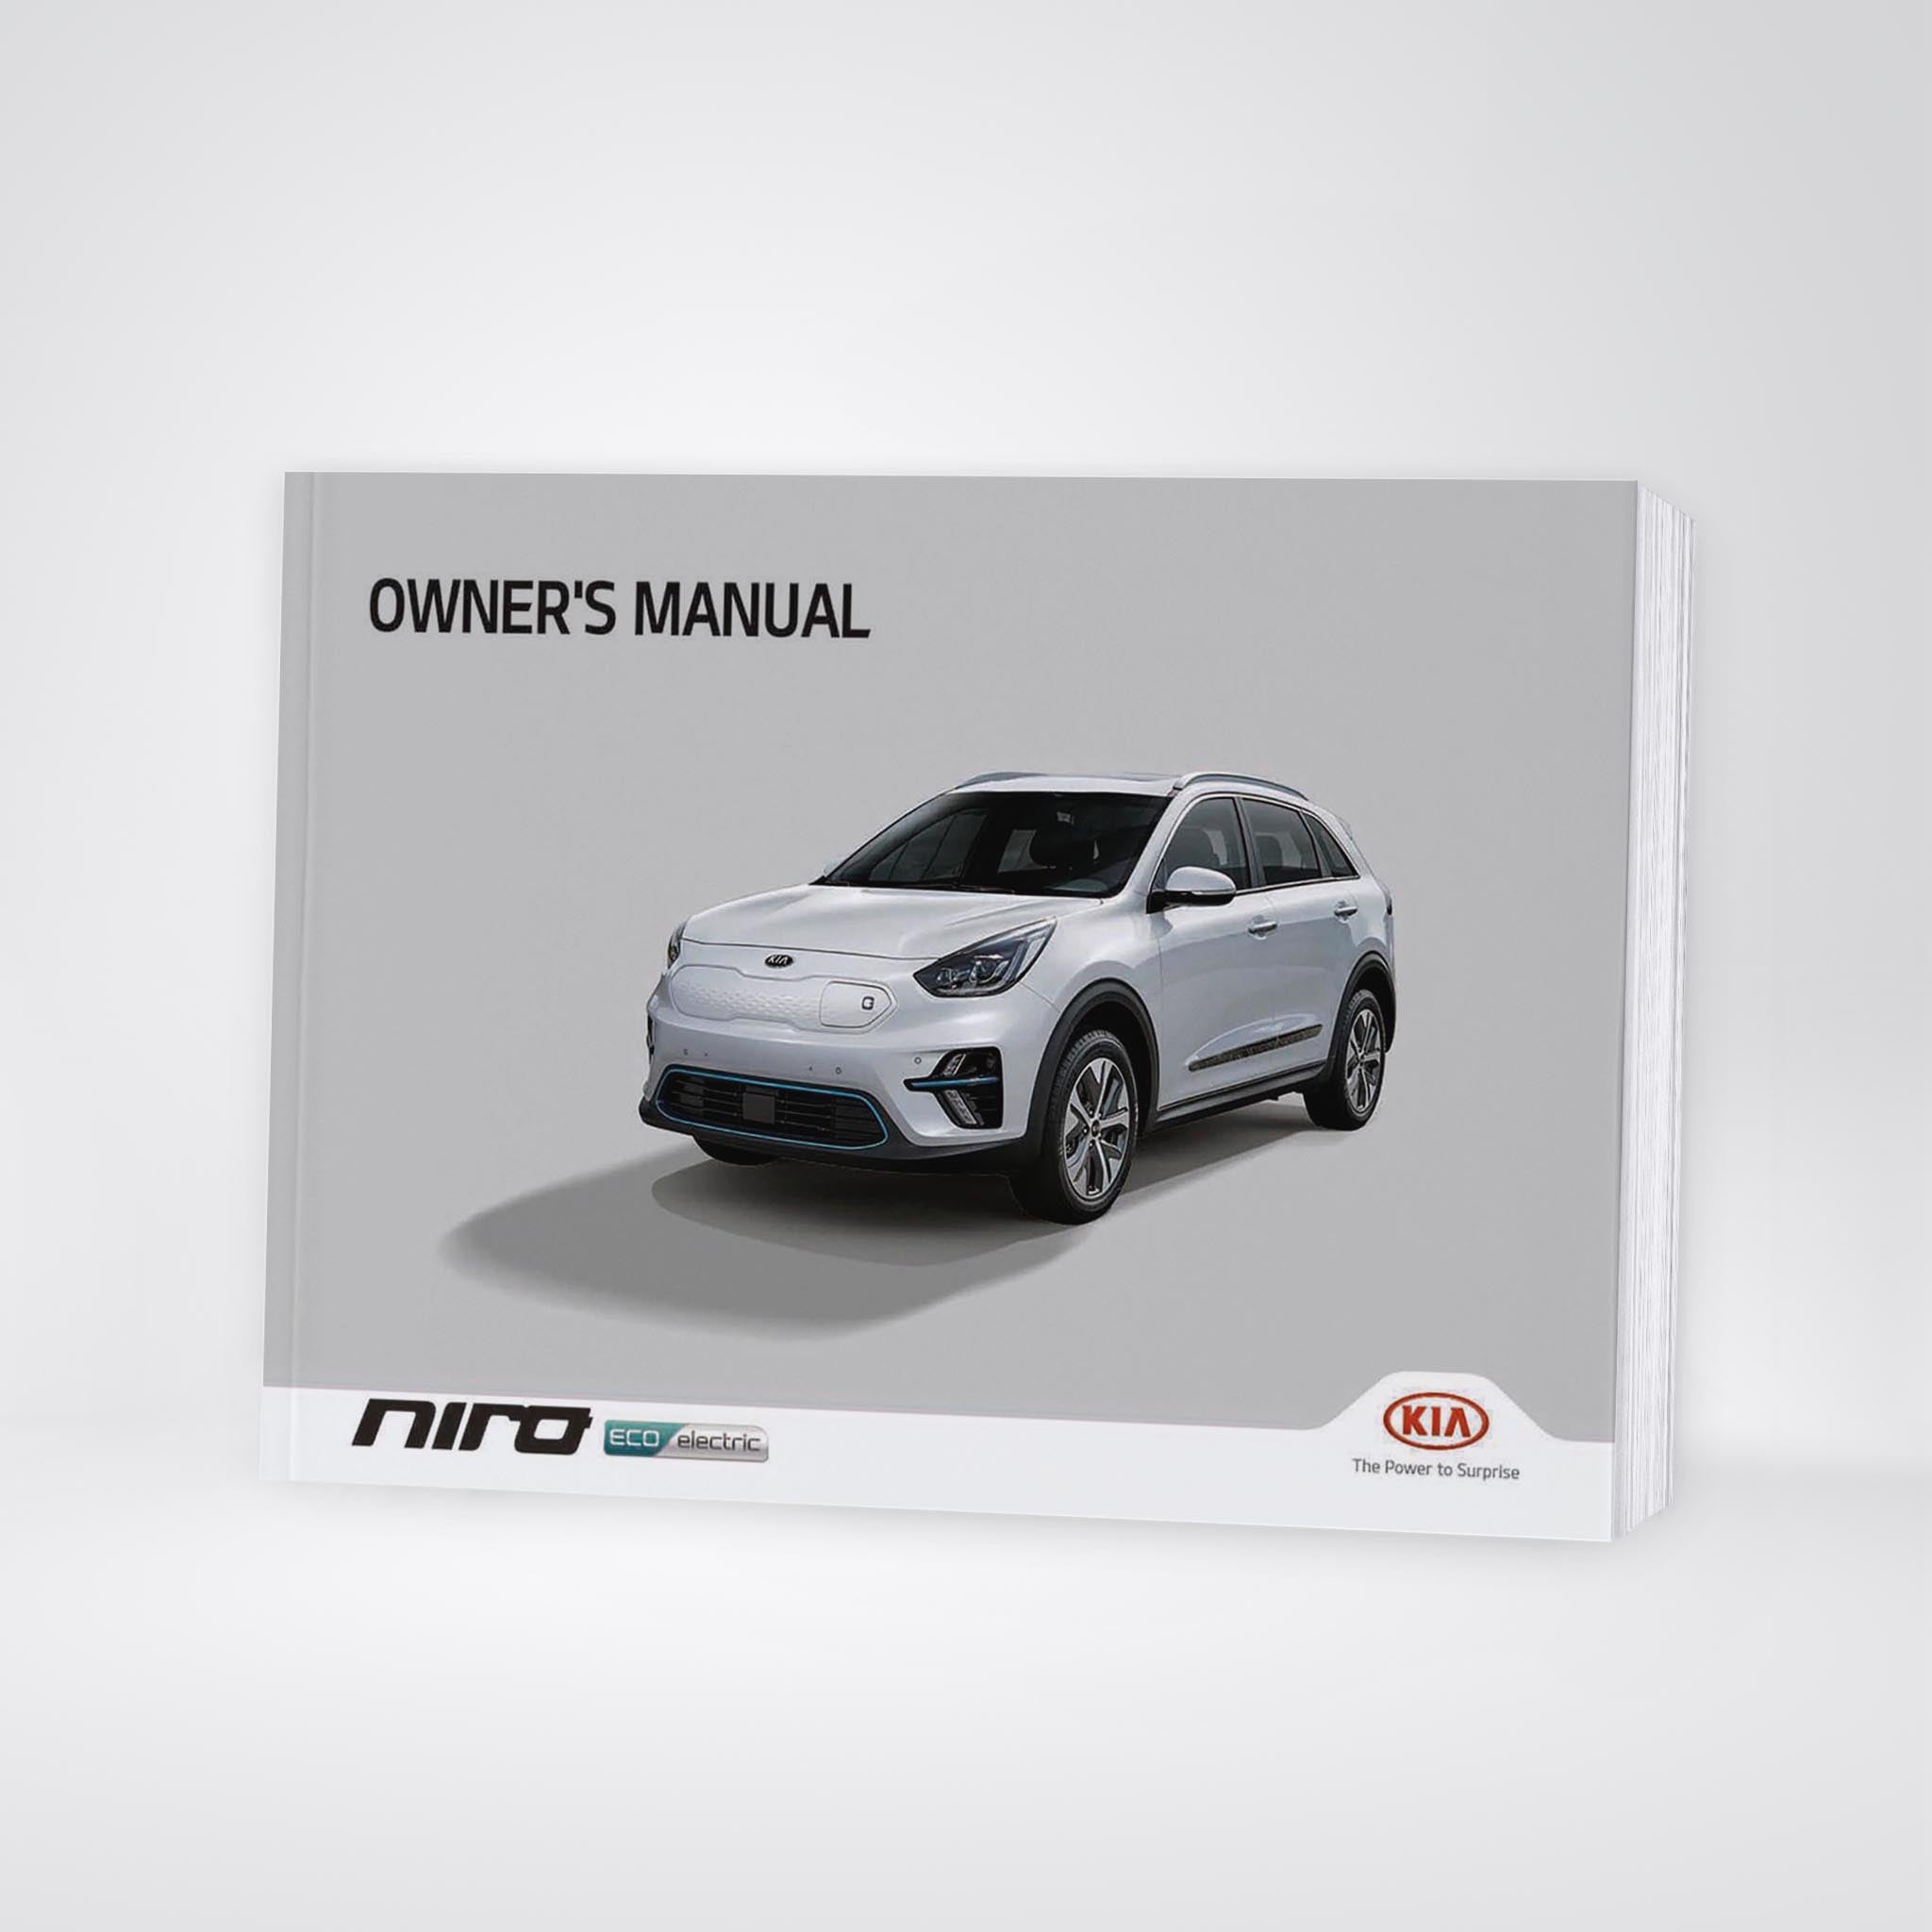 nood motor Het koud krijgen Kia Niro Eco Electric Owner's Manual 2019 - 2021 – Carmanuals